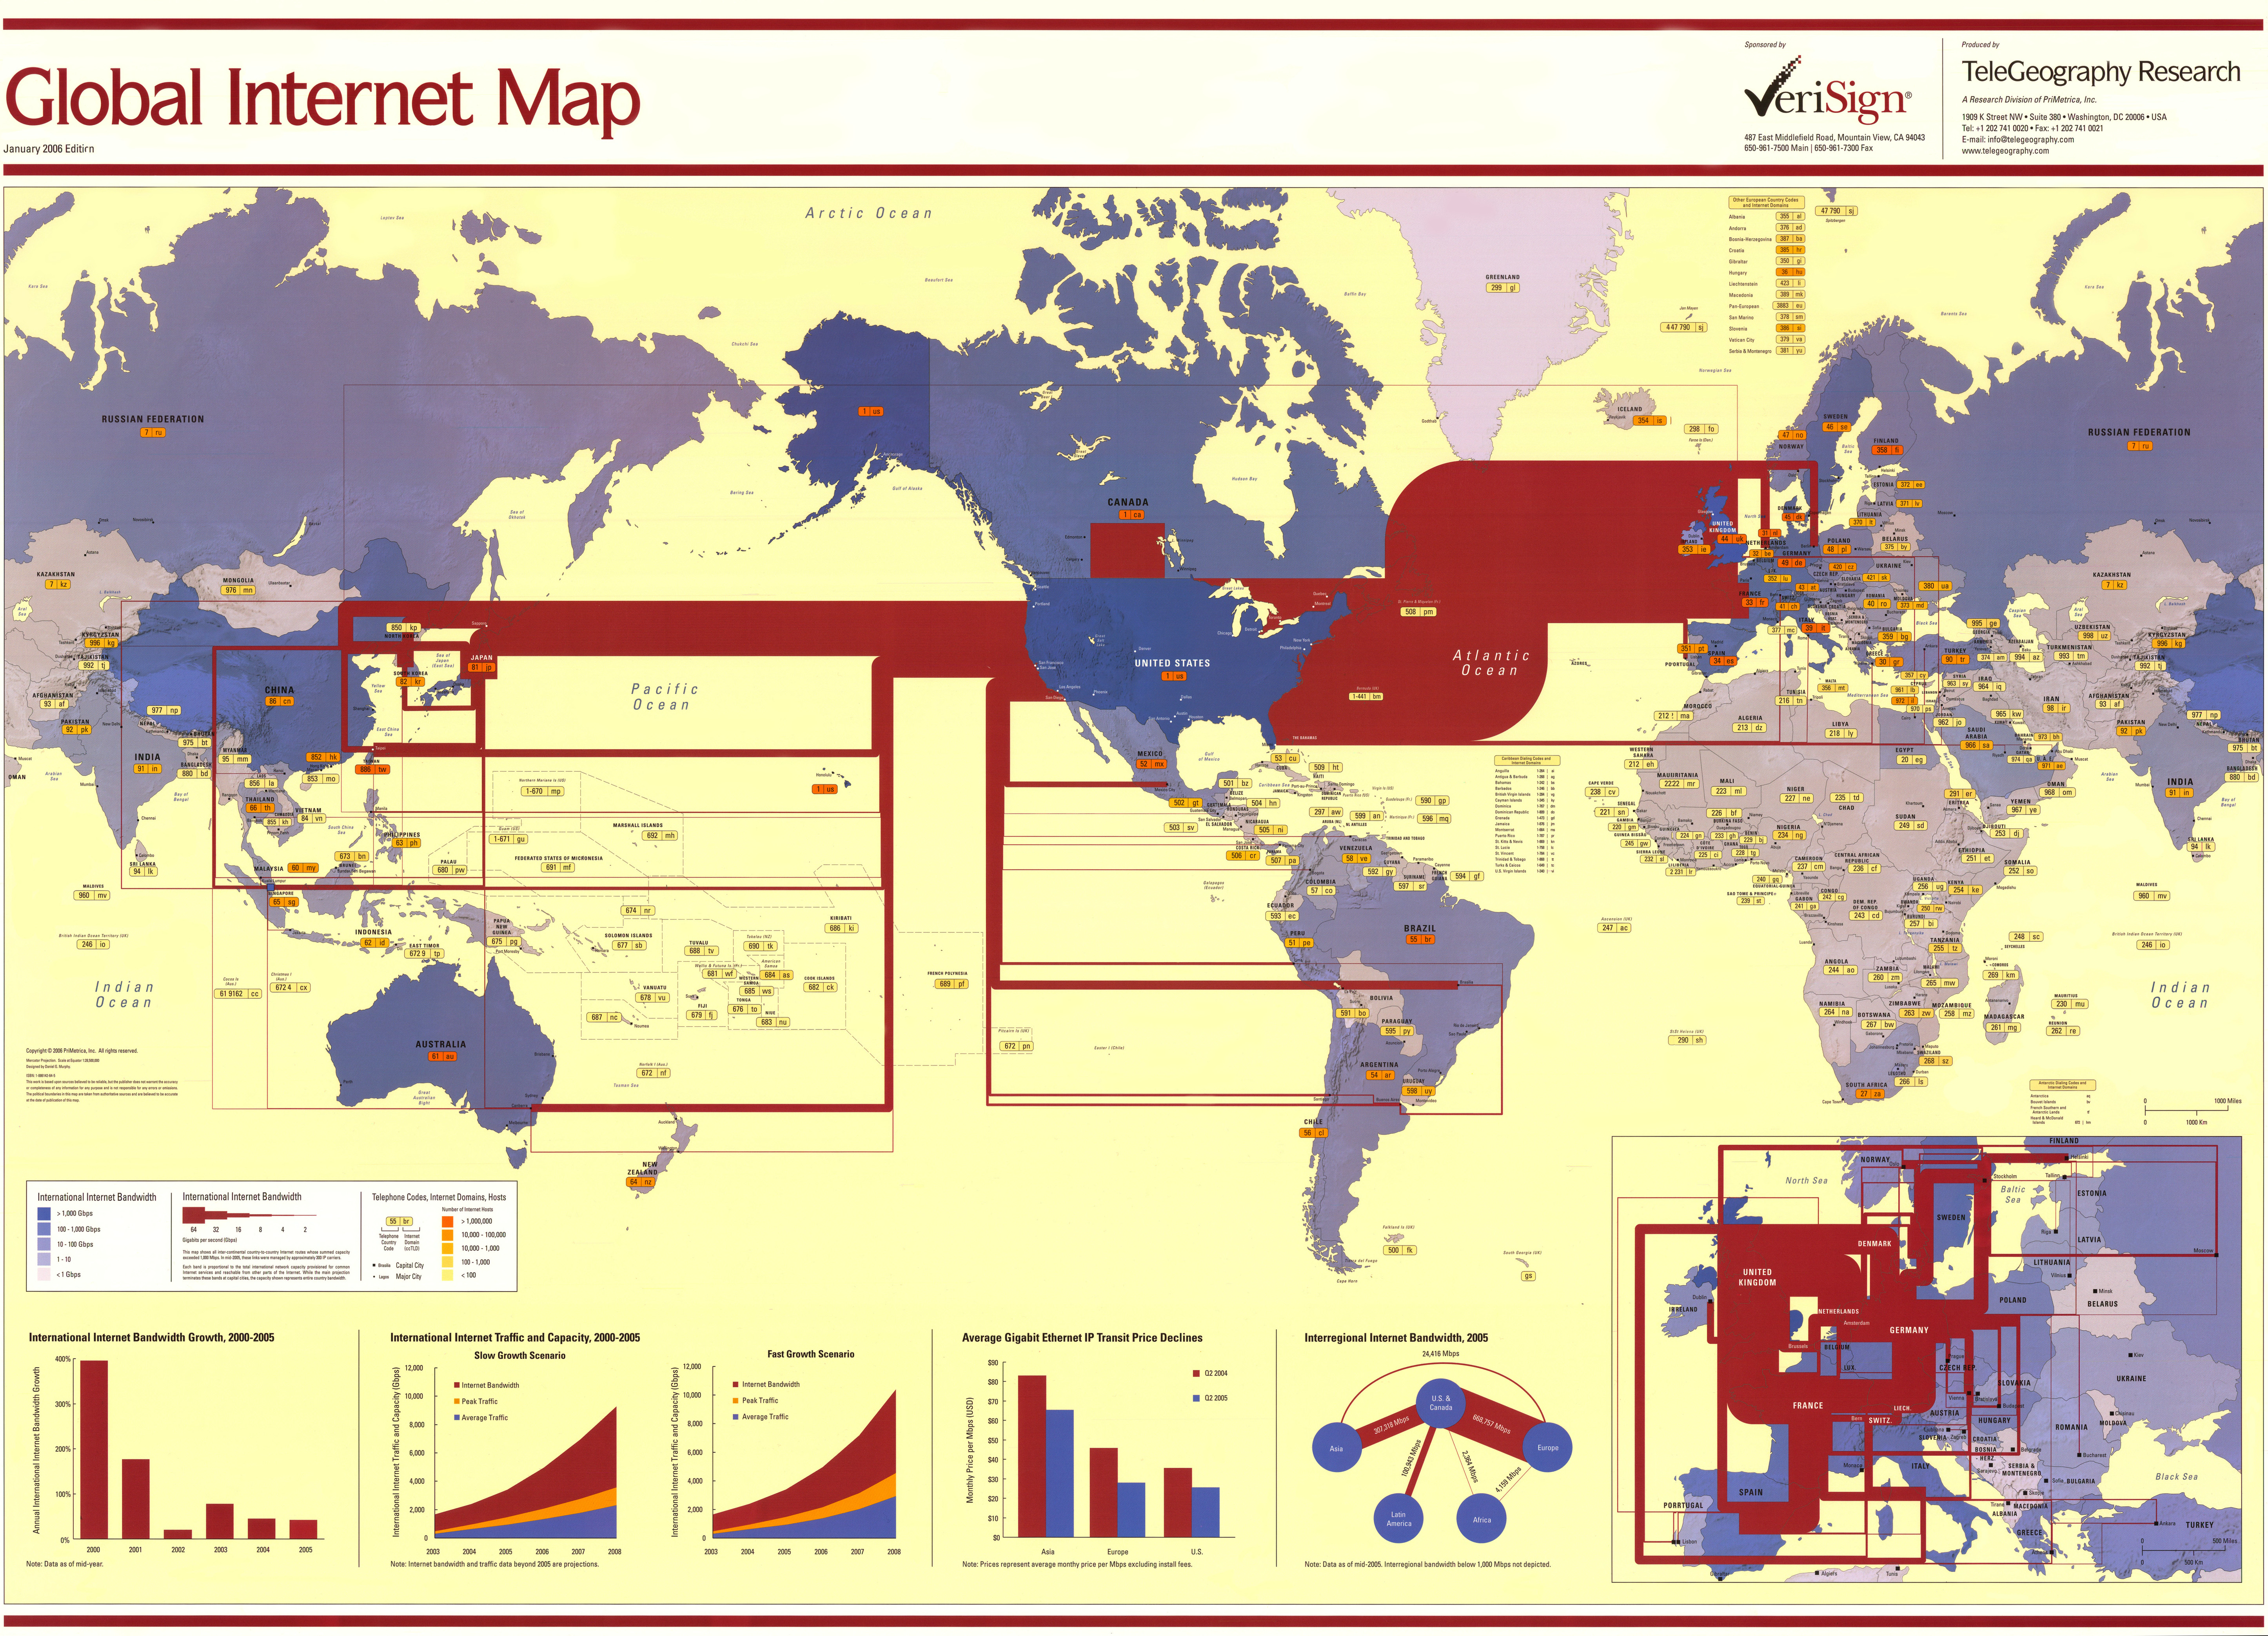 Internet is a global. Карта интернета. Карта глобального интернета. Карта мирового интернета. Мировая сеть интернет карта.